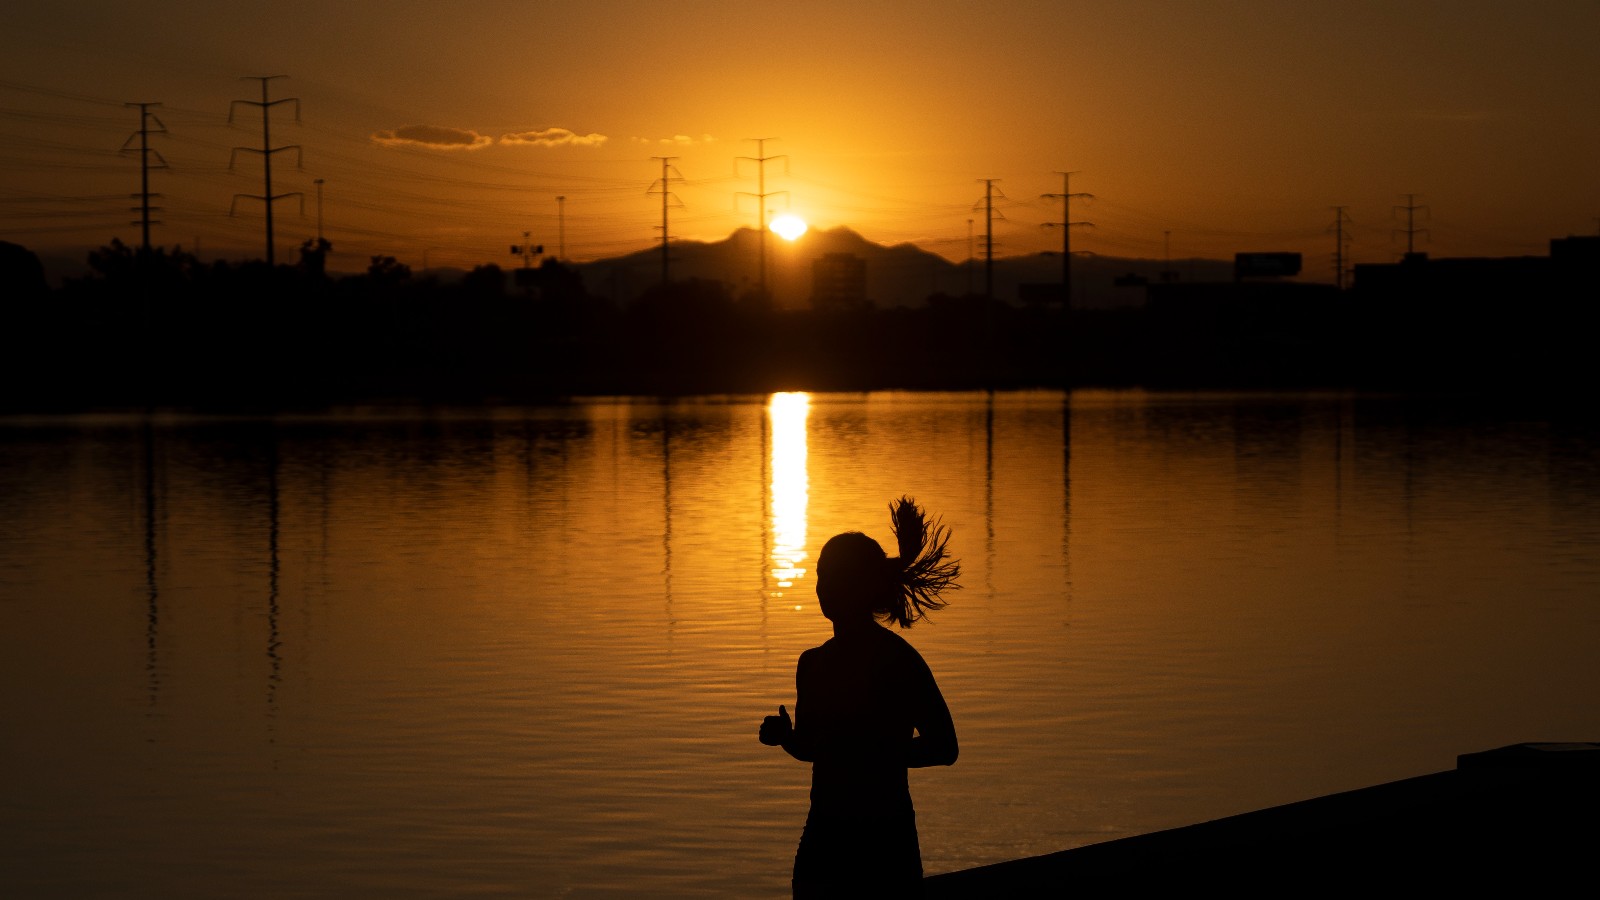 A woman runs along a lake as the sun rises next to power lines.